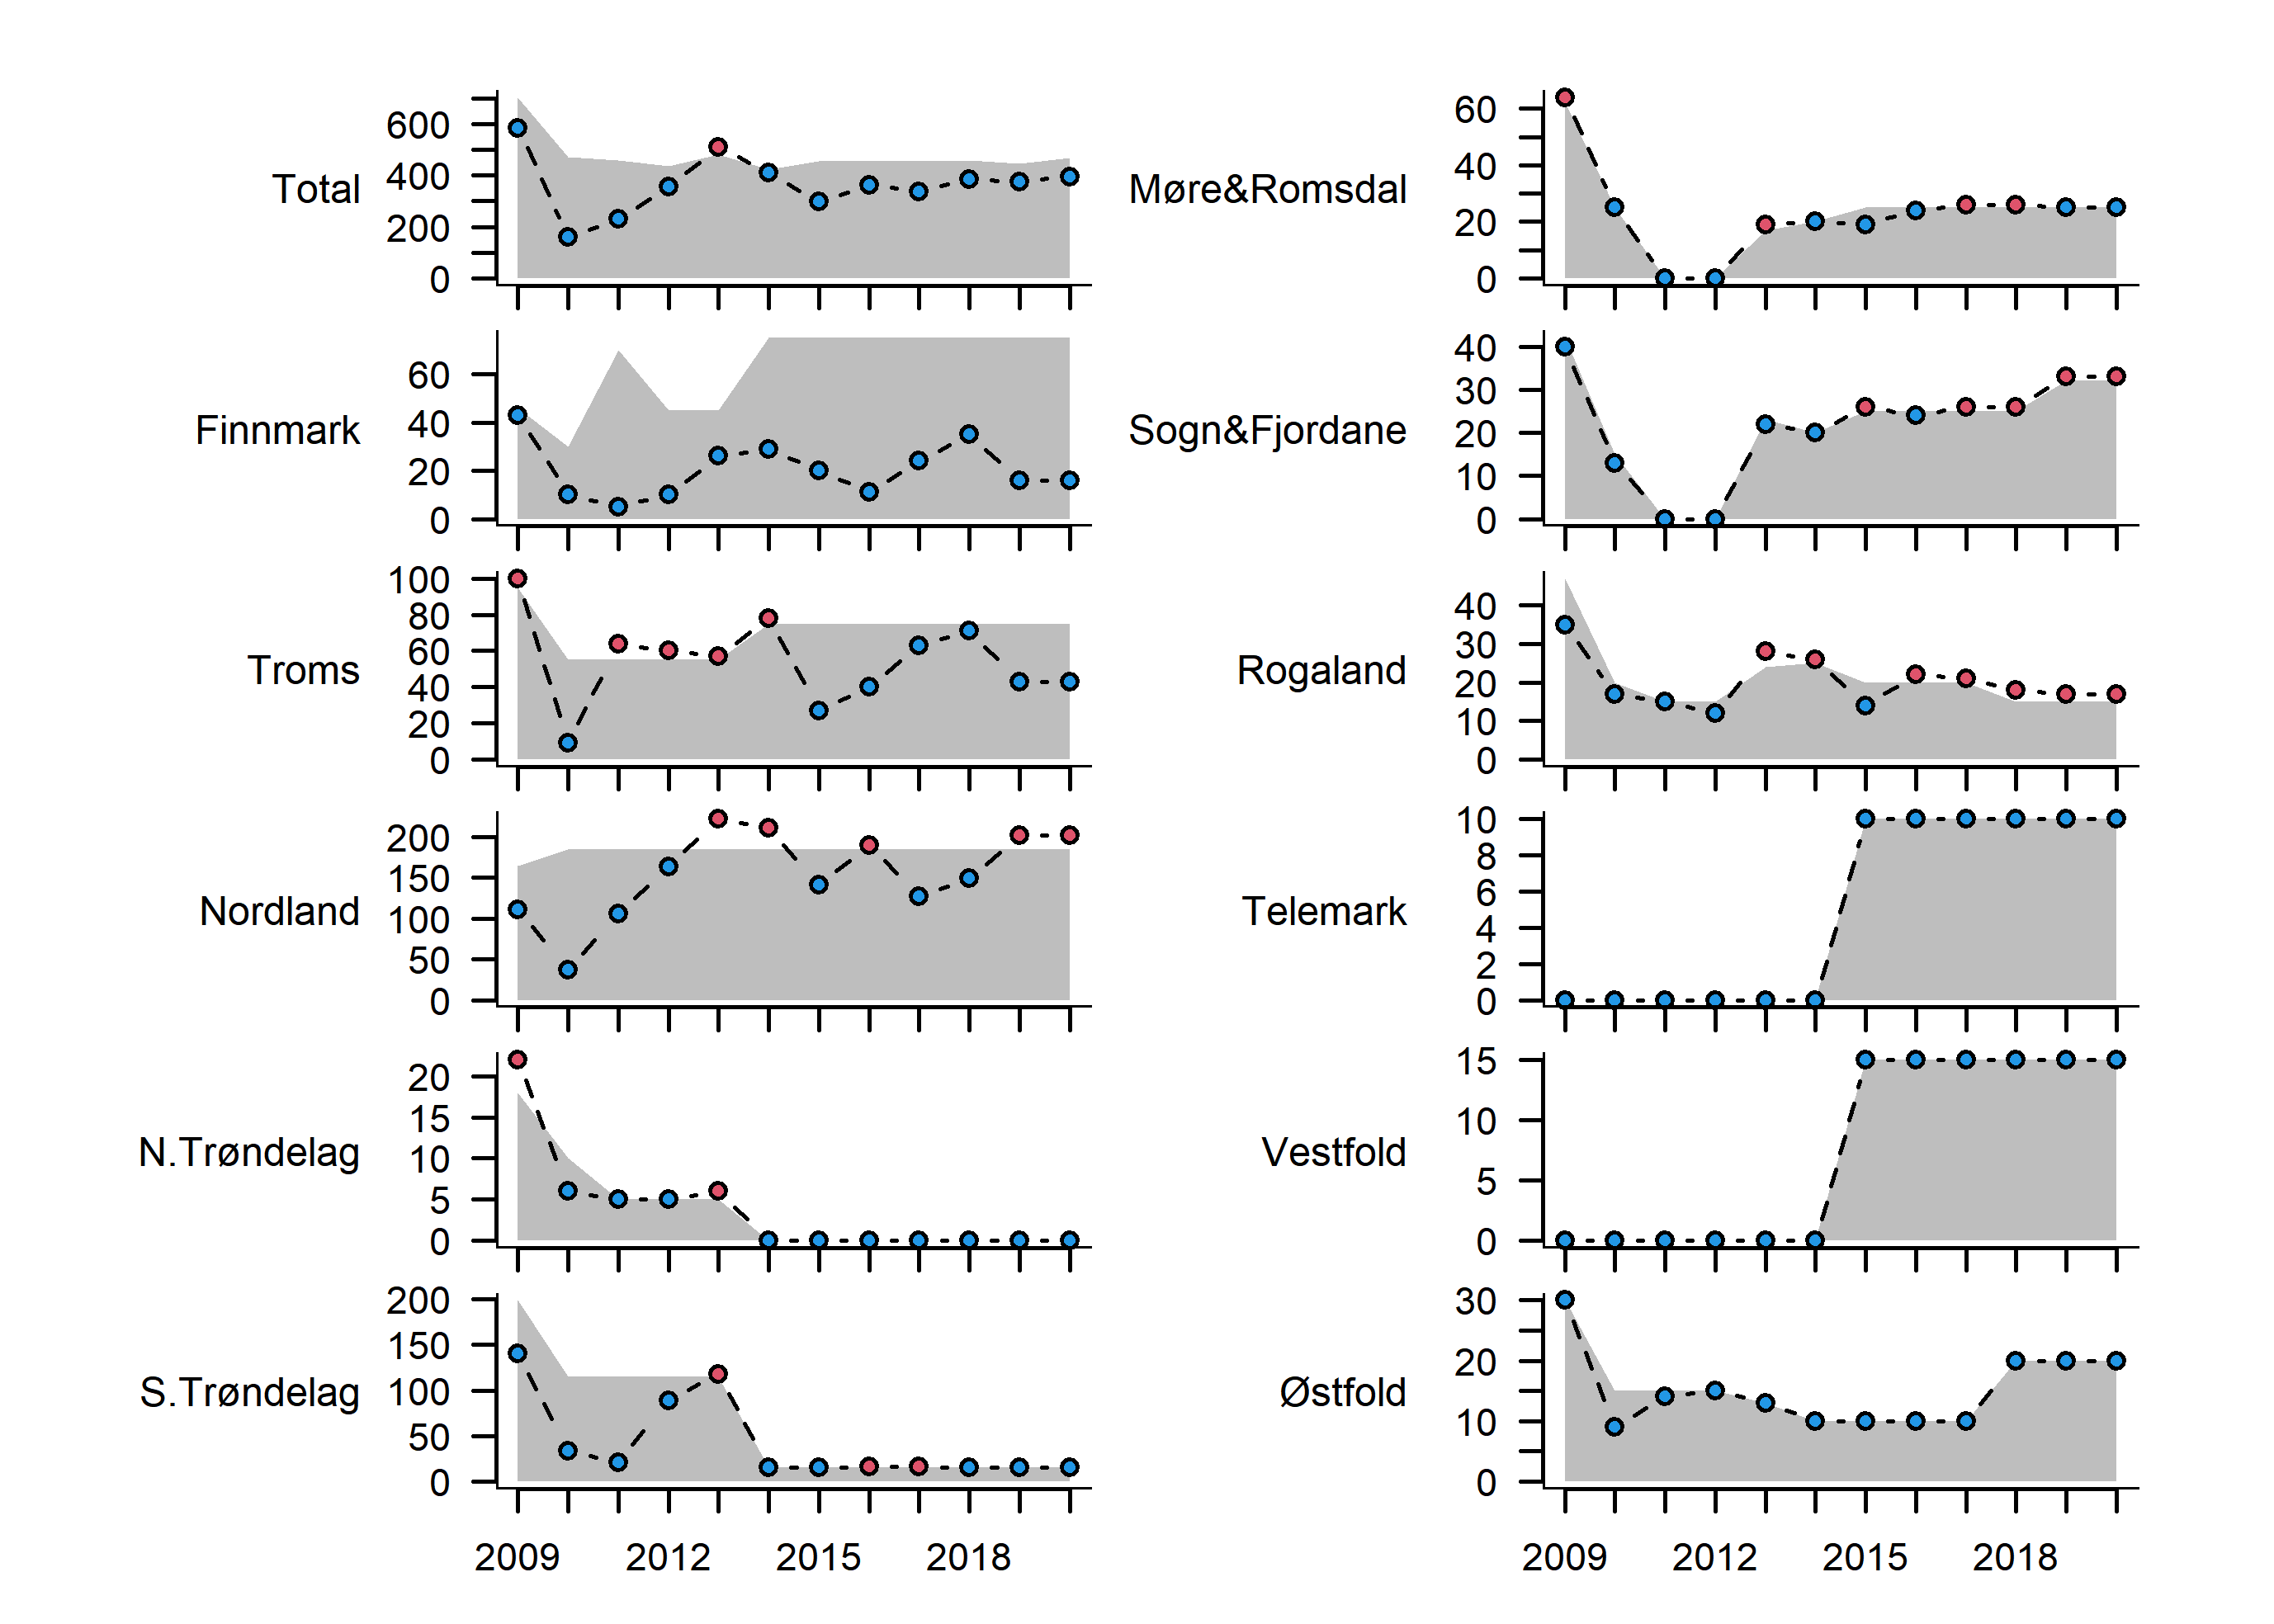 Graf over kvoter og fangst fordelt på fylke